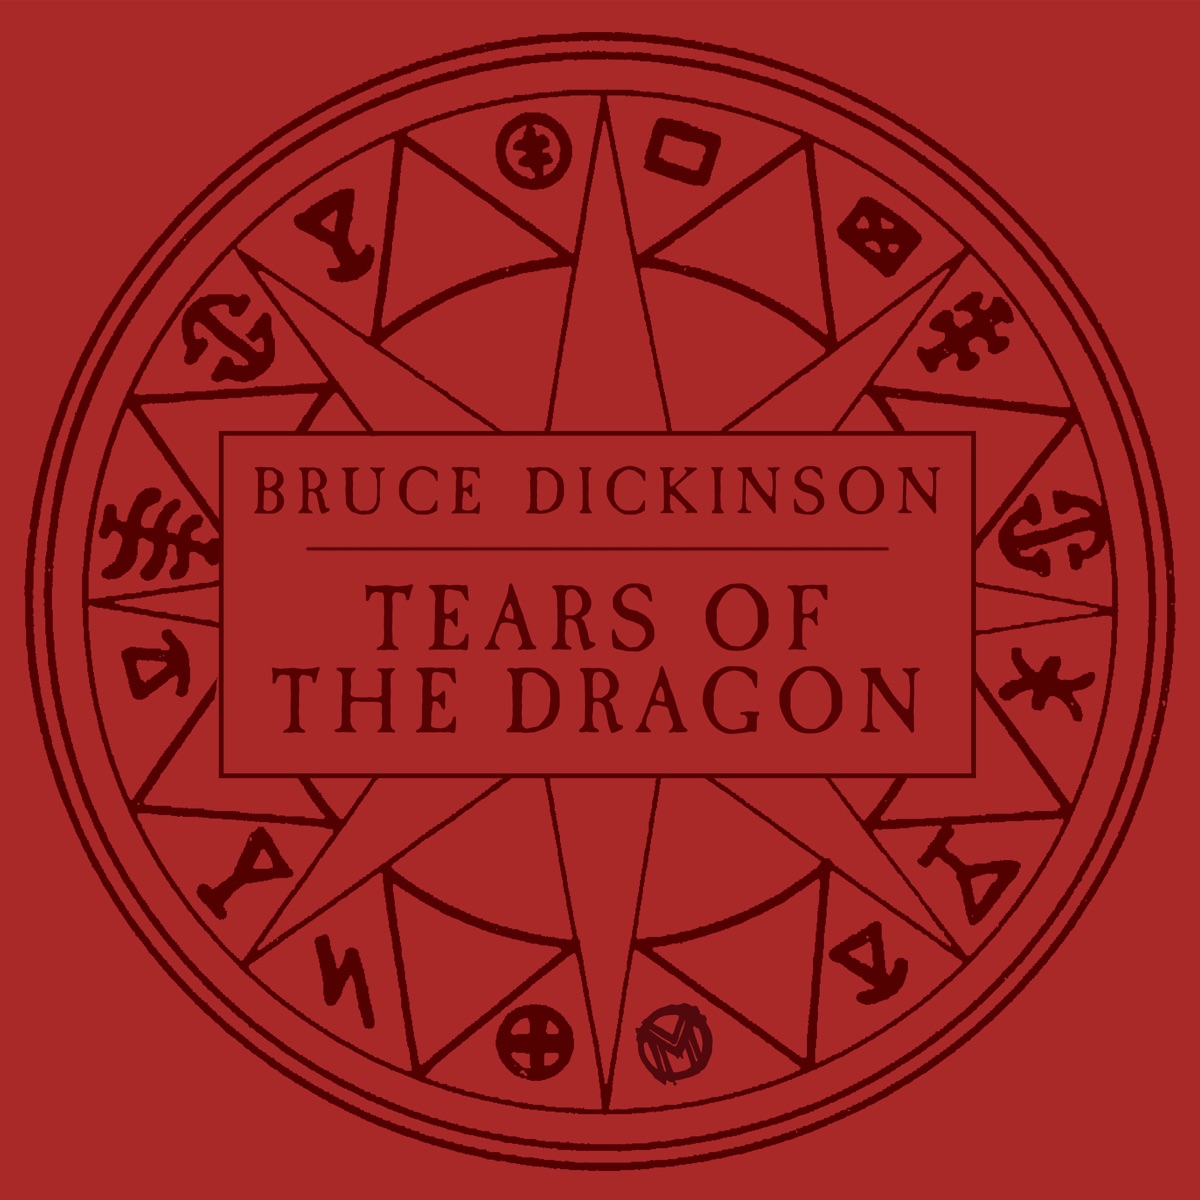 BRUCE DICKINSON ] - Tears Of The Dragon mostra os motivos da saída